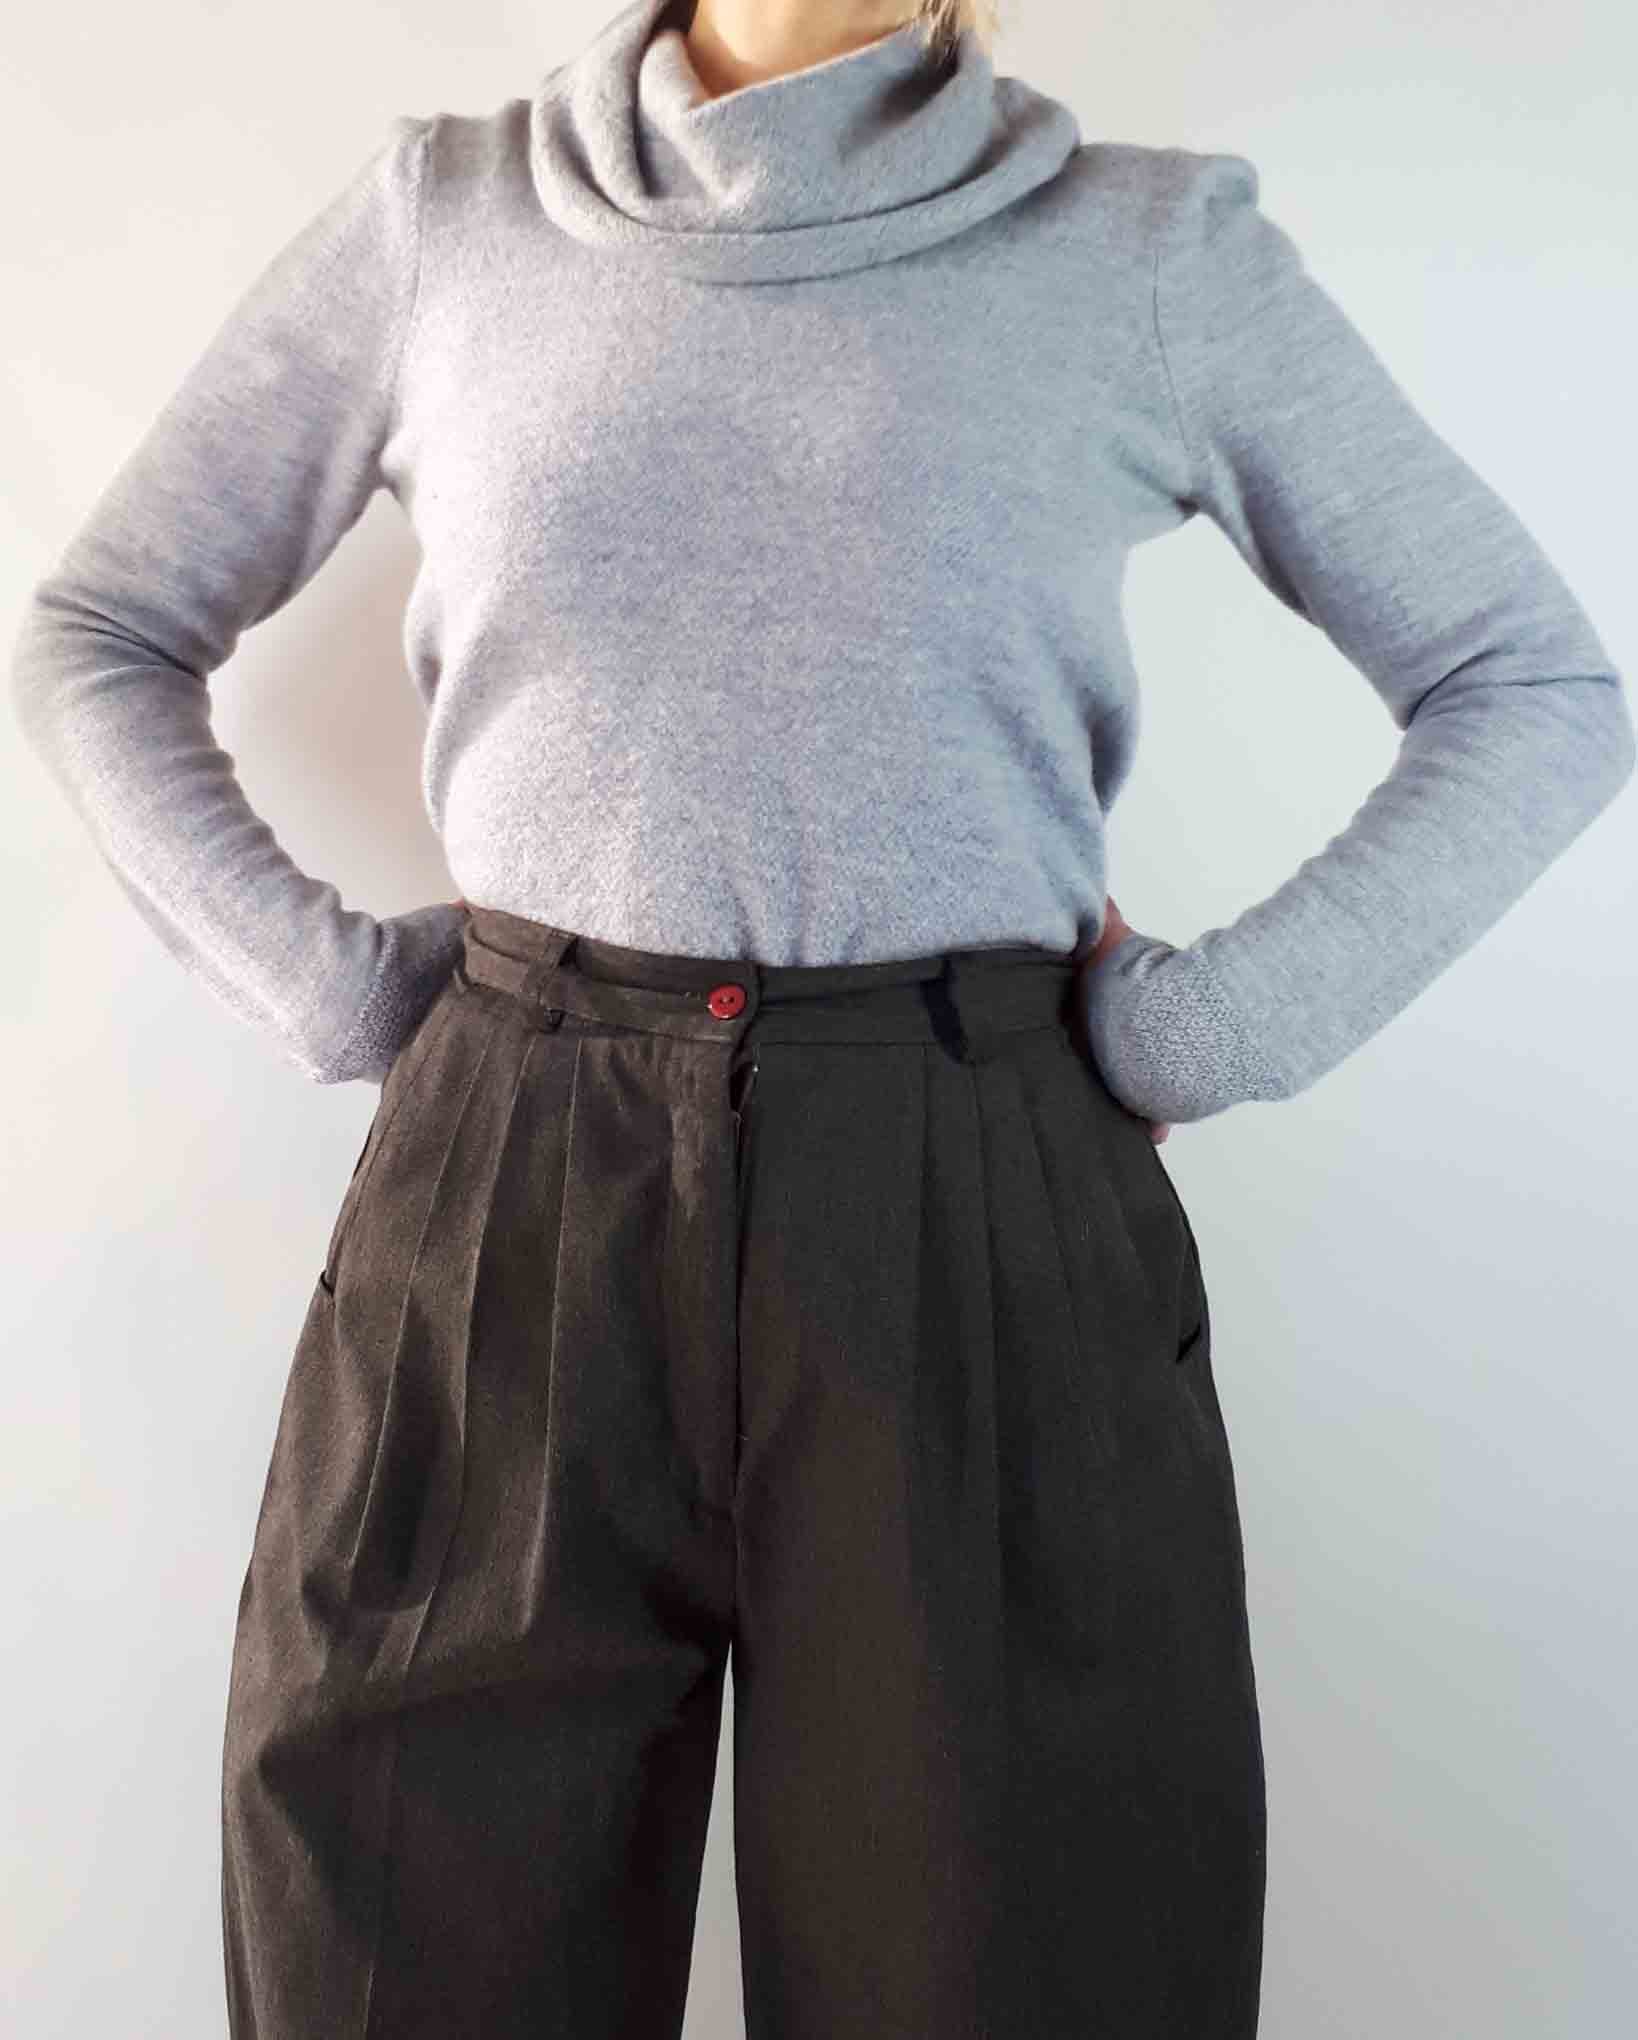 Adrienne Vittadini Grey Merino Wool Turtleneck Sweater